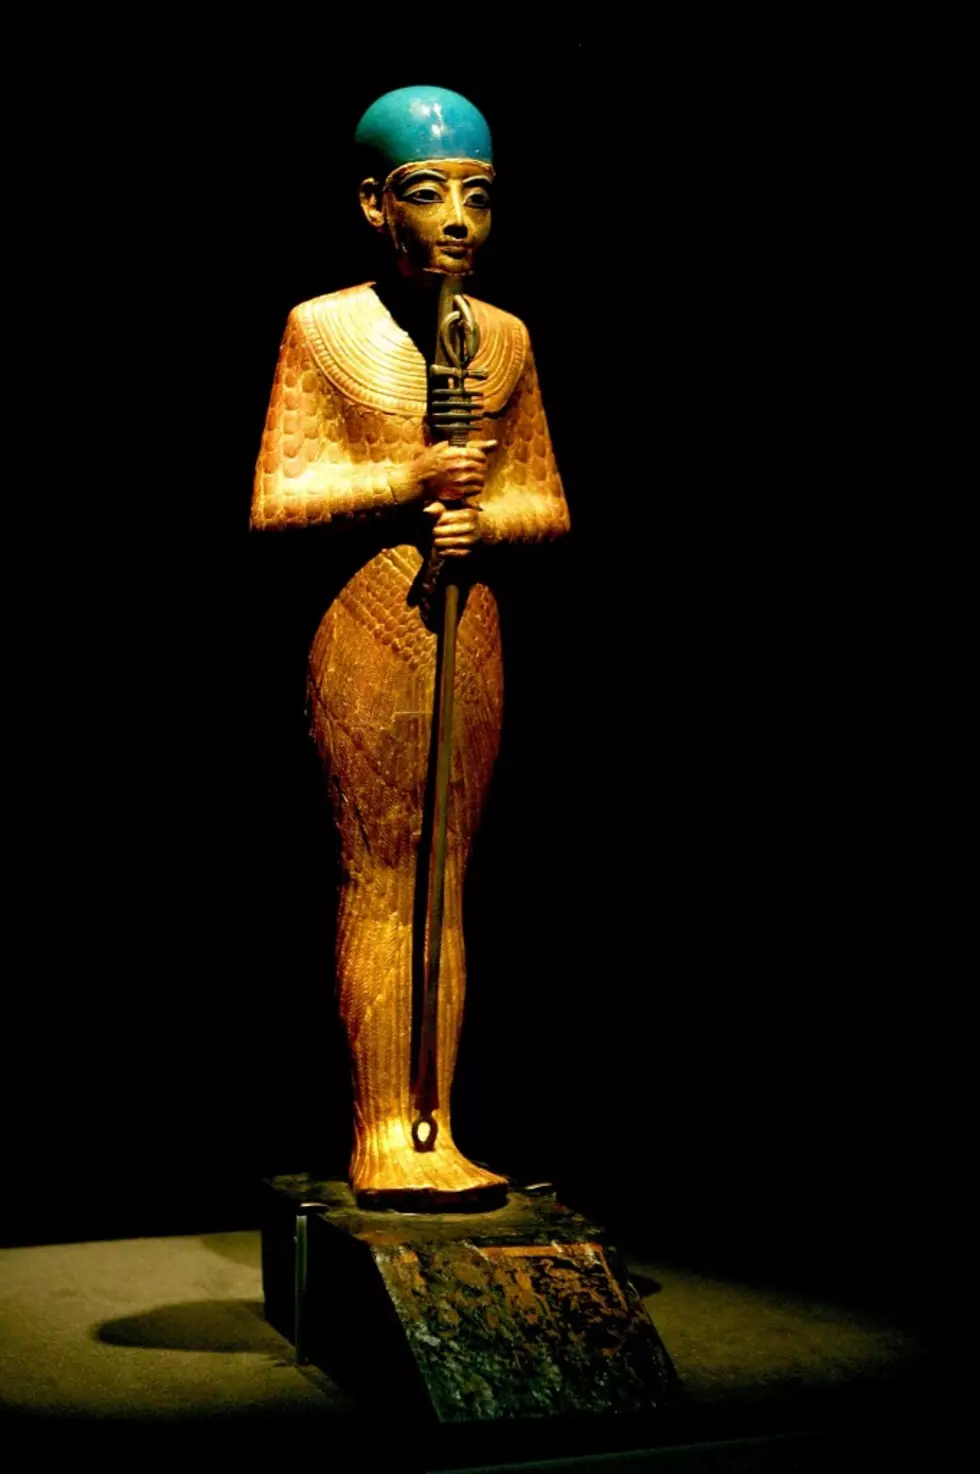 Was The Oscar Statuette Copied?